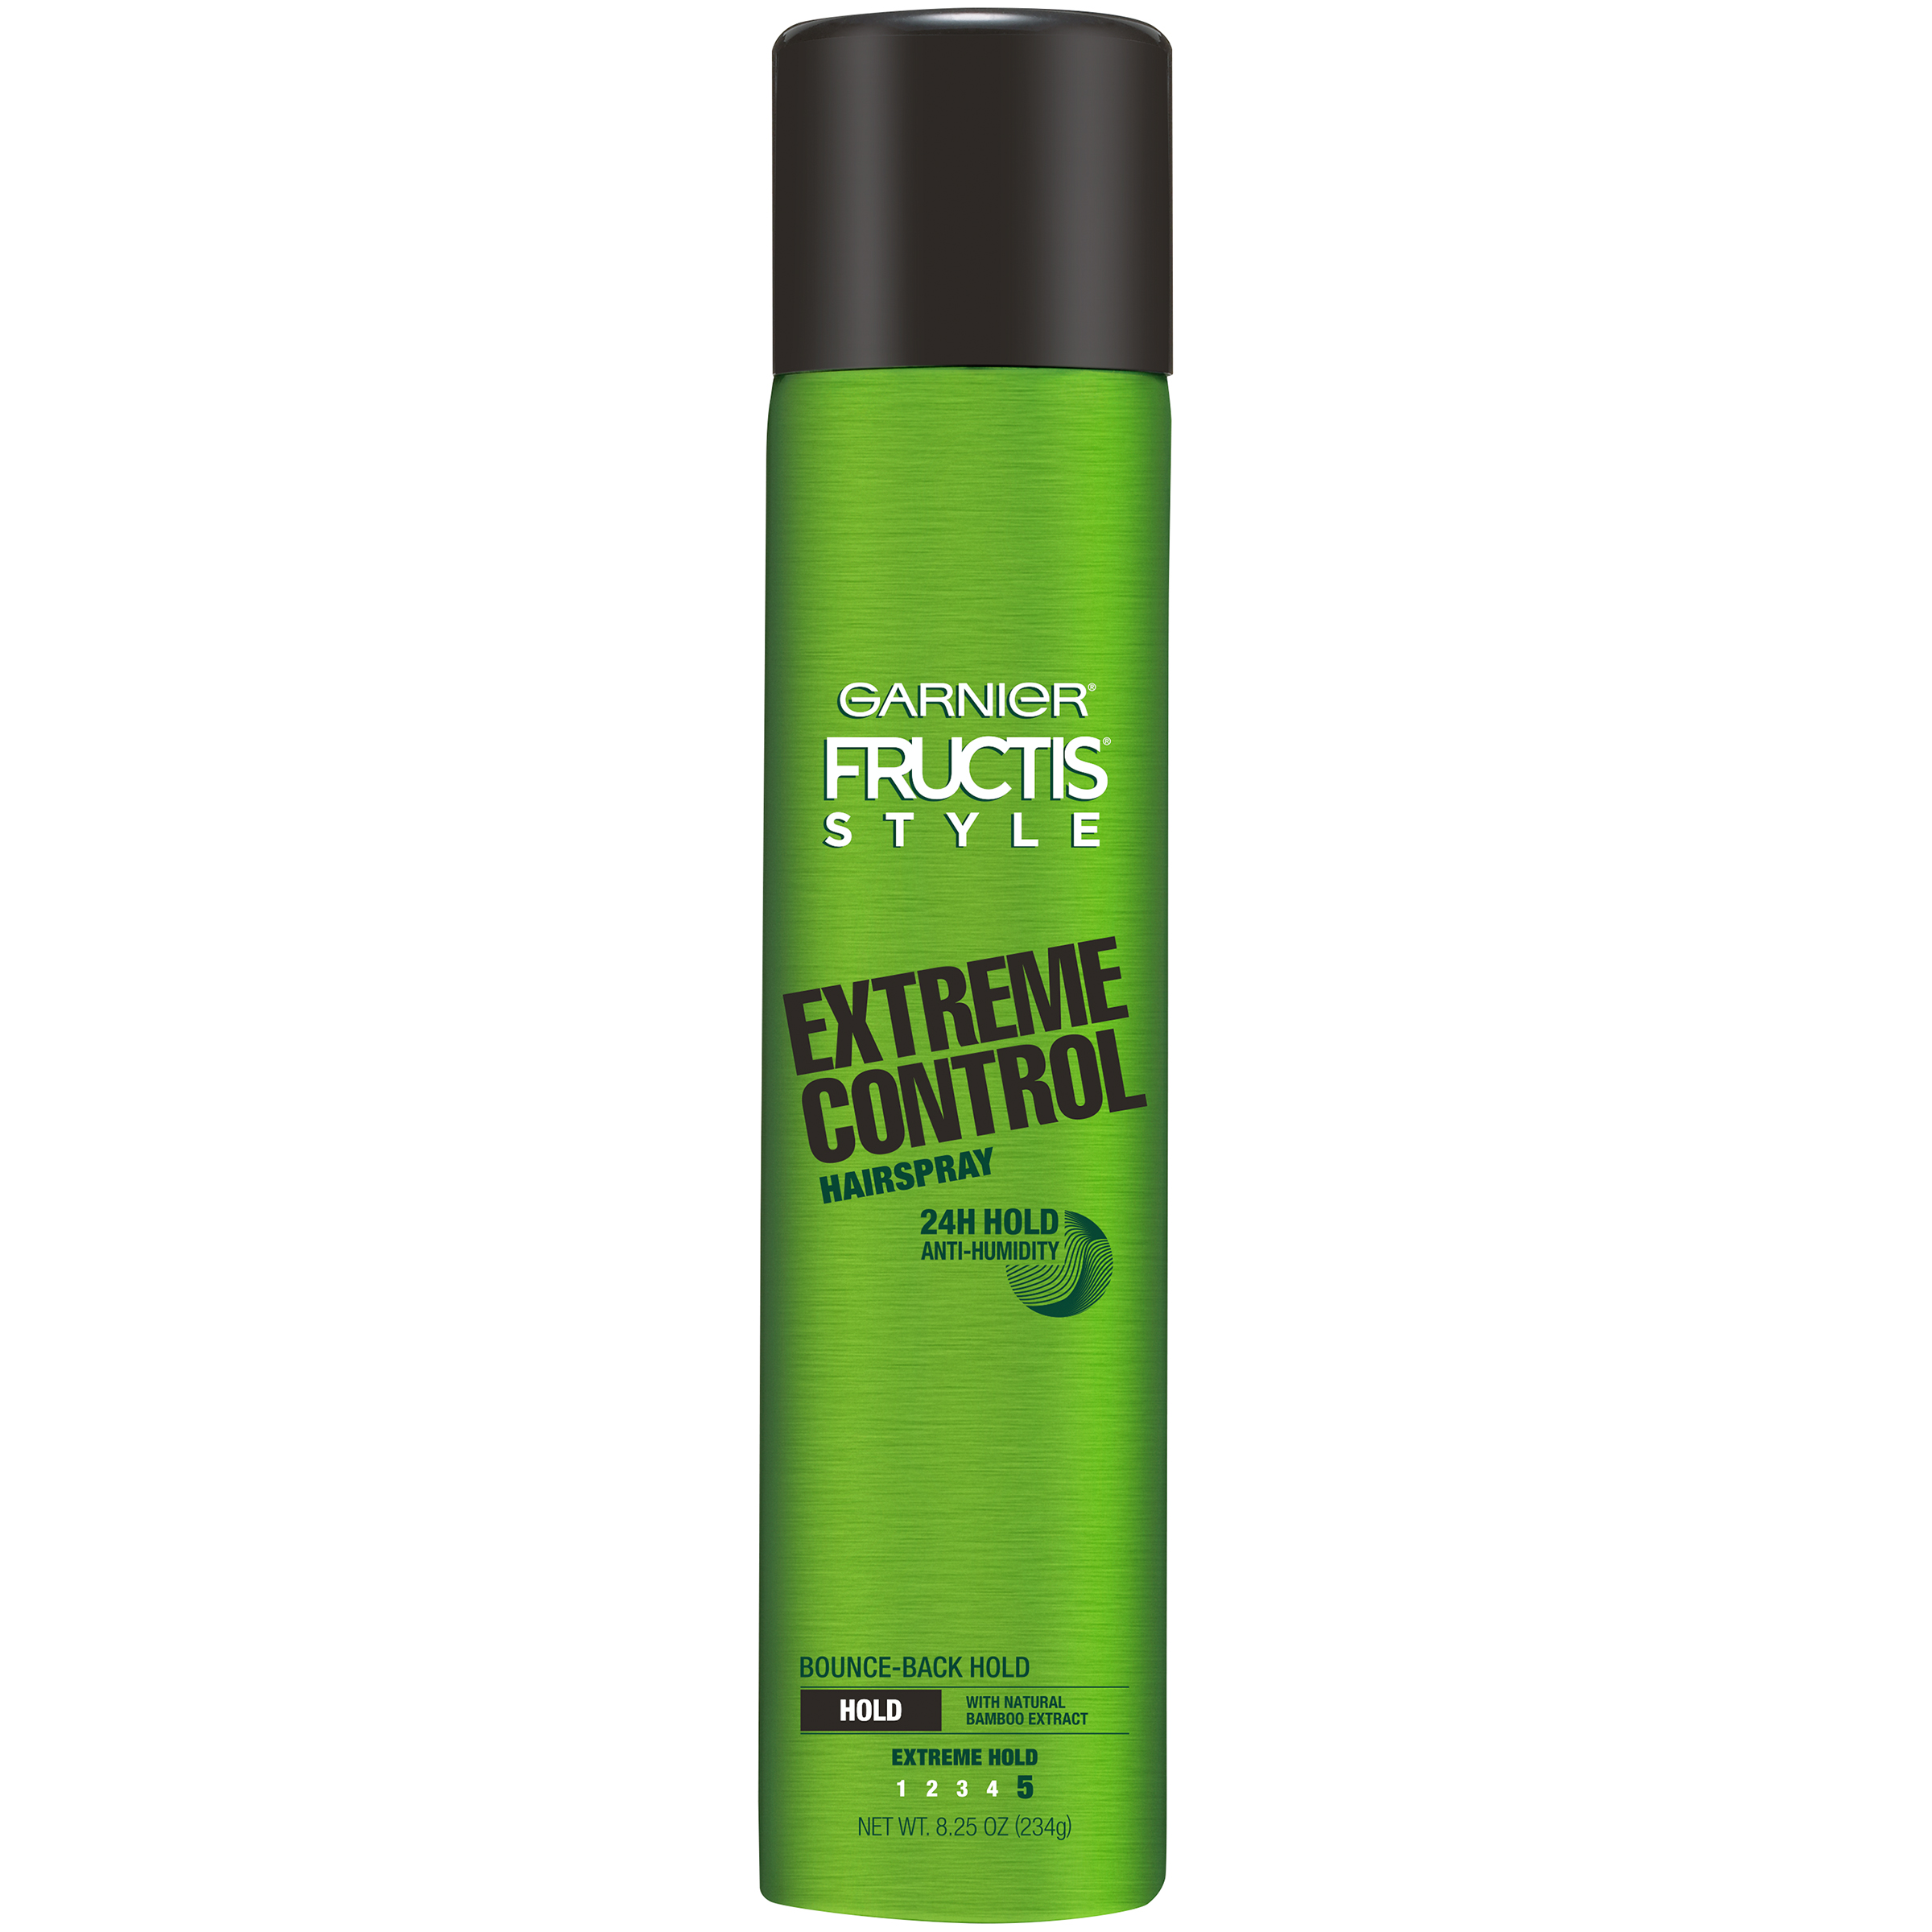 Garnier Fructis Style  Hairspray, Anti-Humidity, Extreme Control, Extreme 5, 8.25 oz